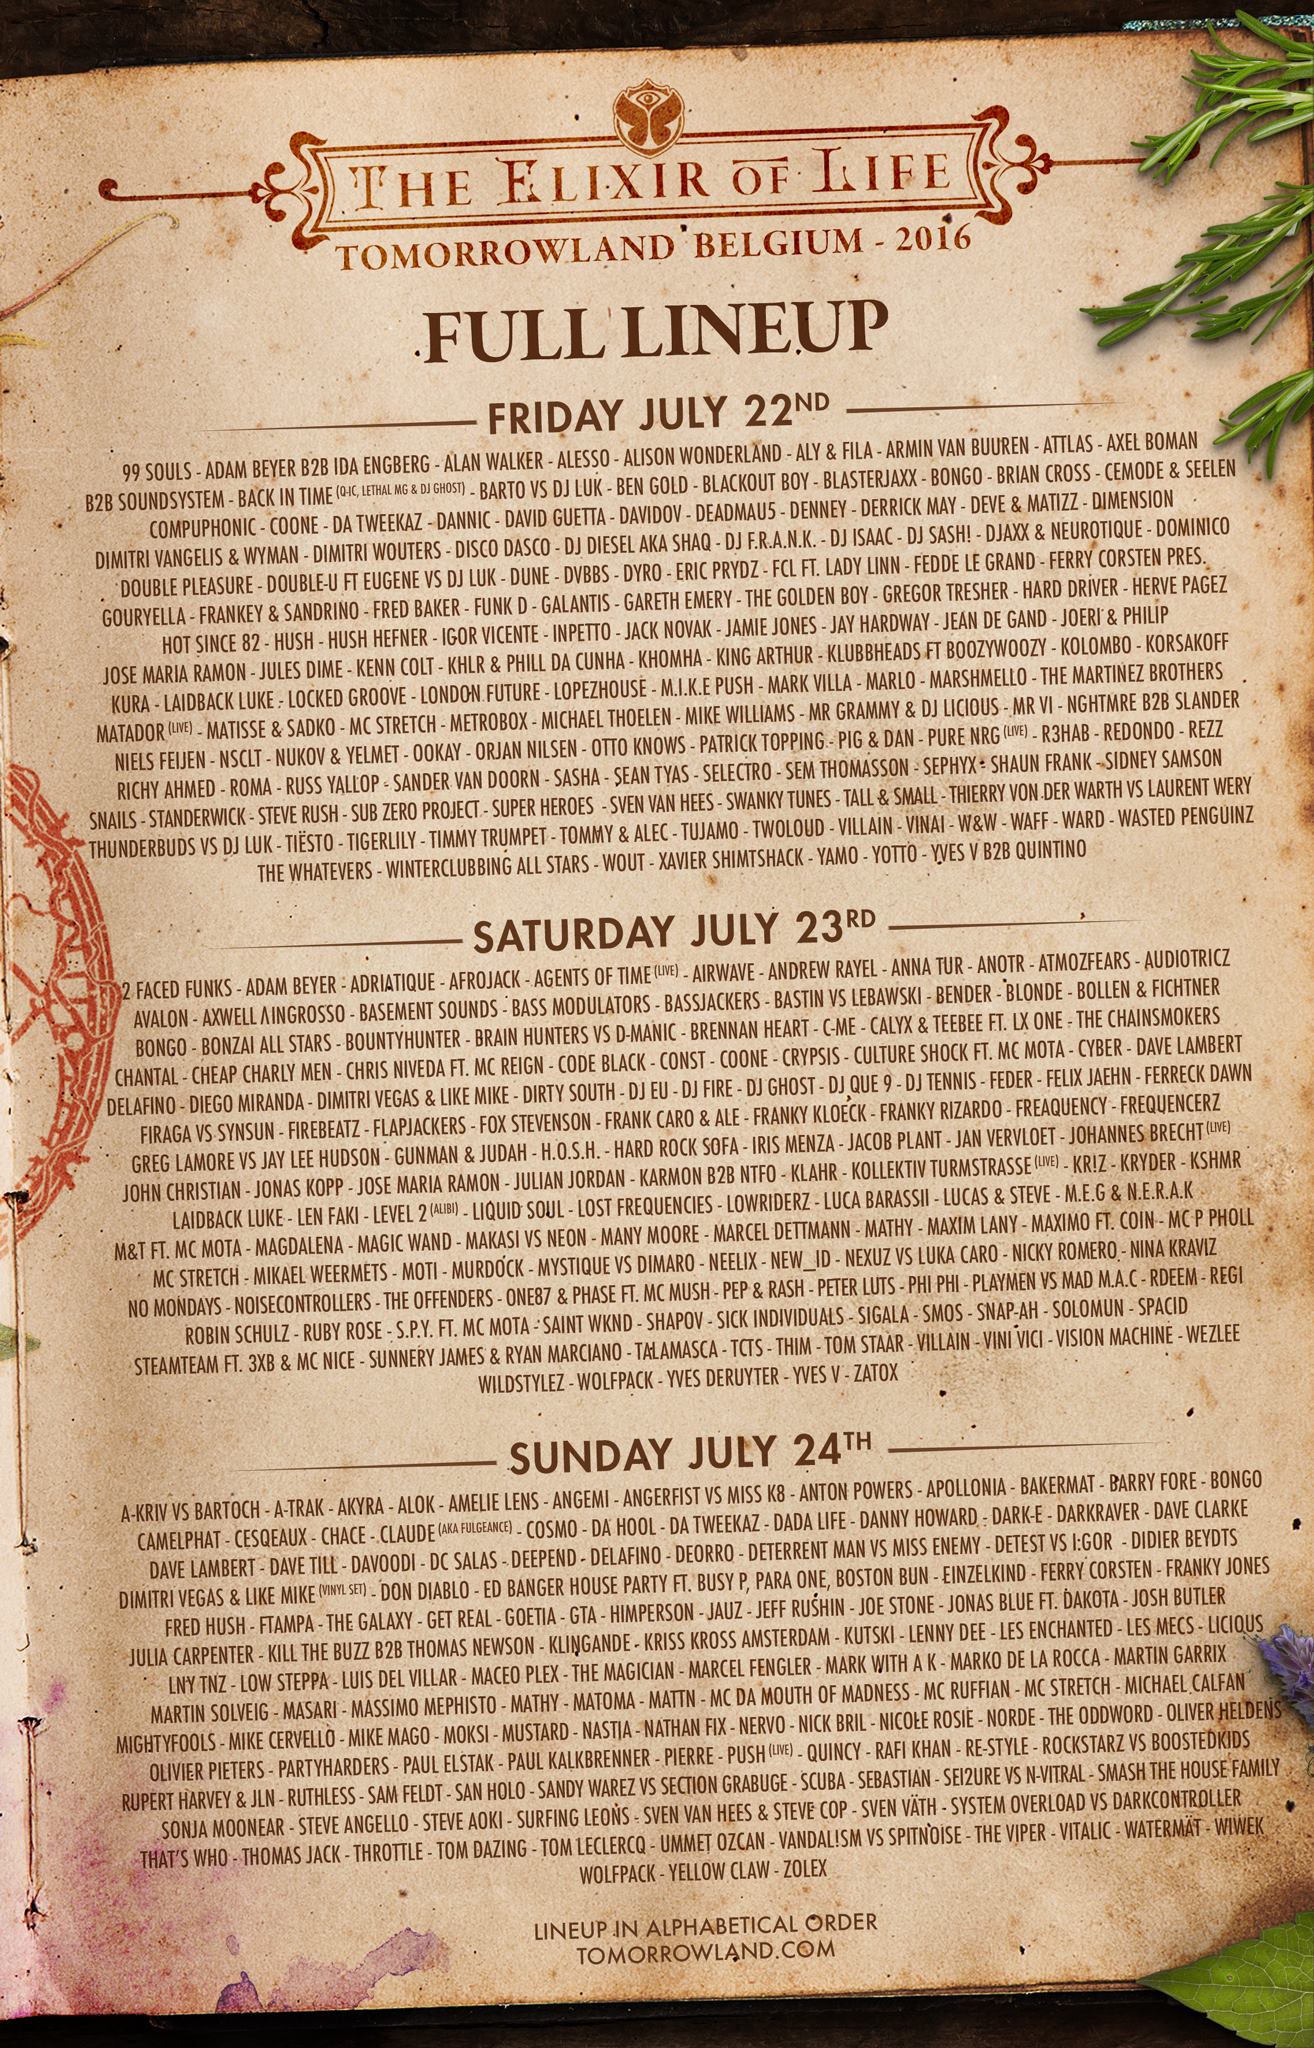 Tomorrowland 2016 full lineup